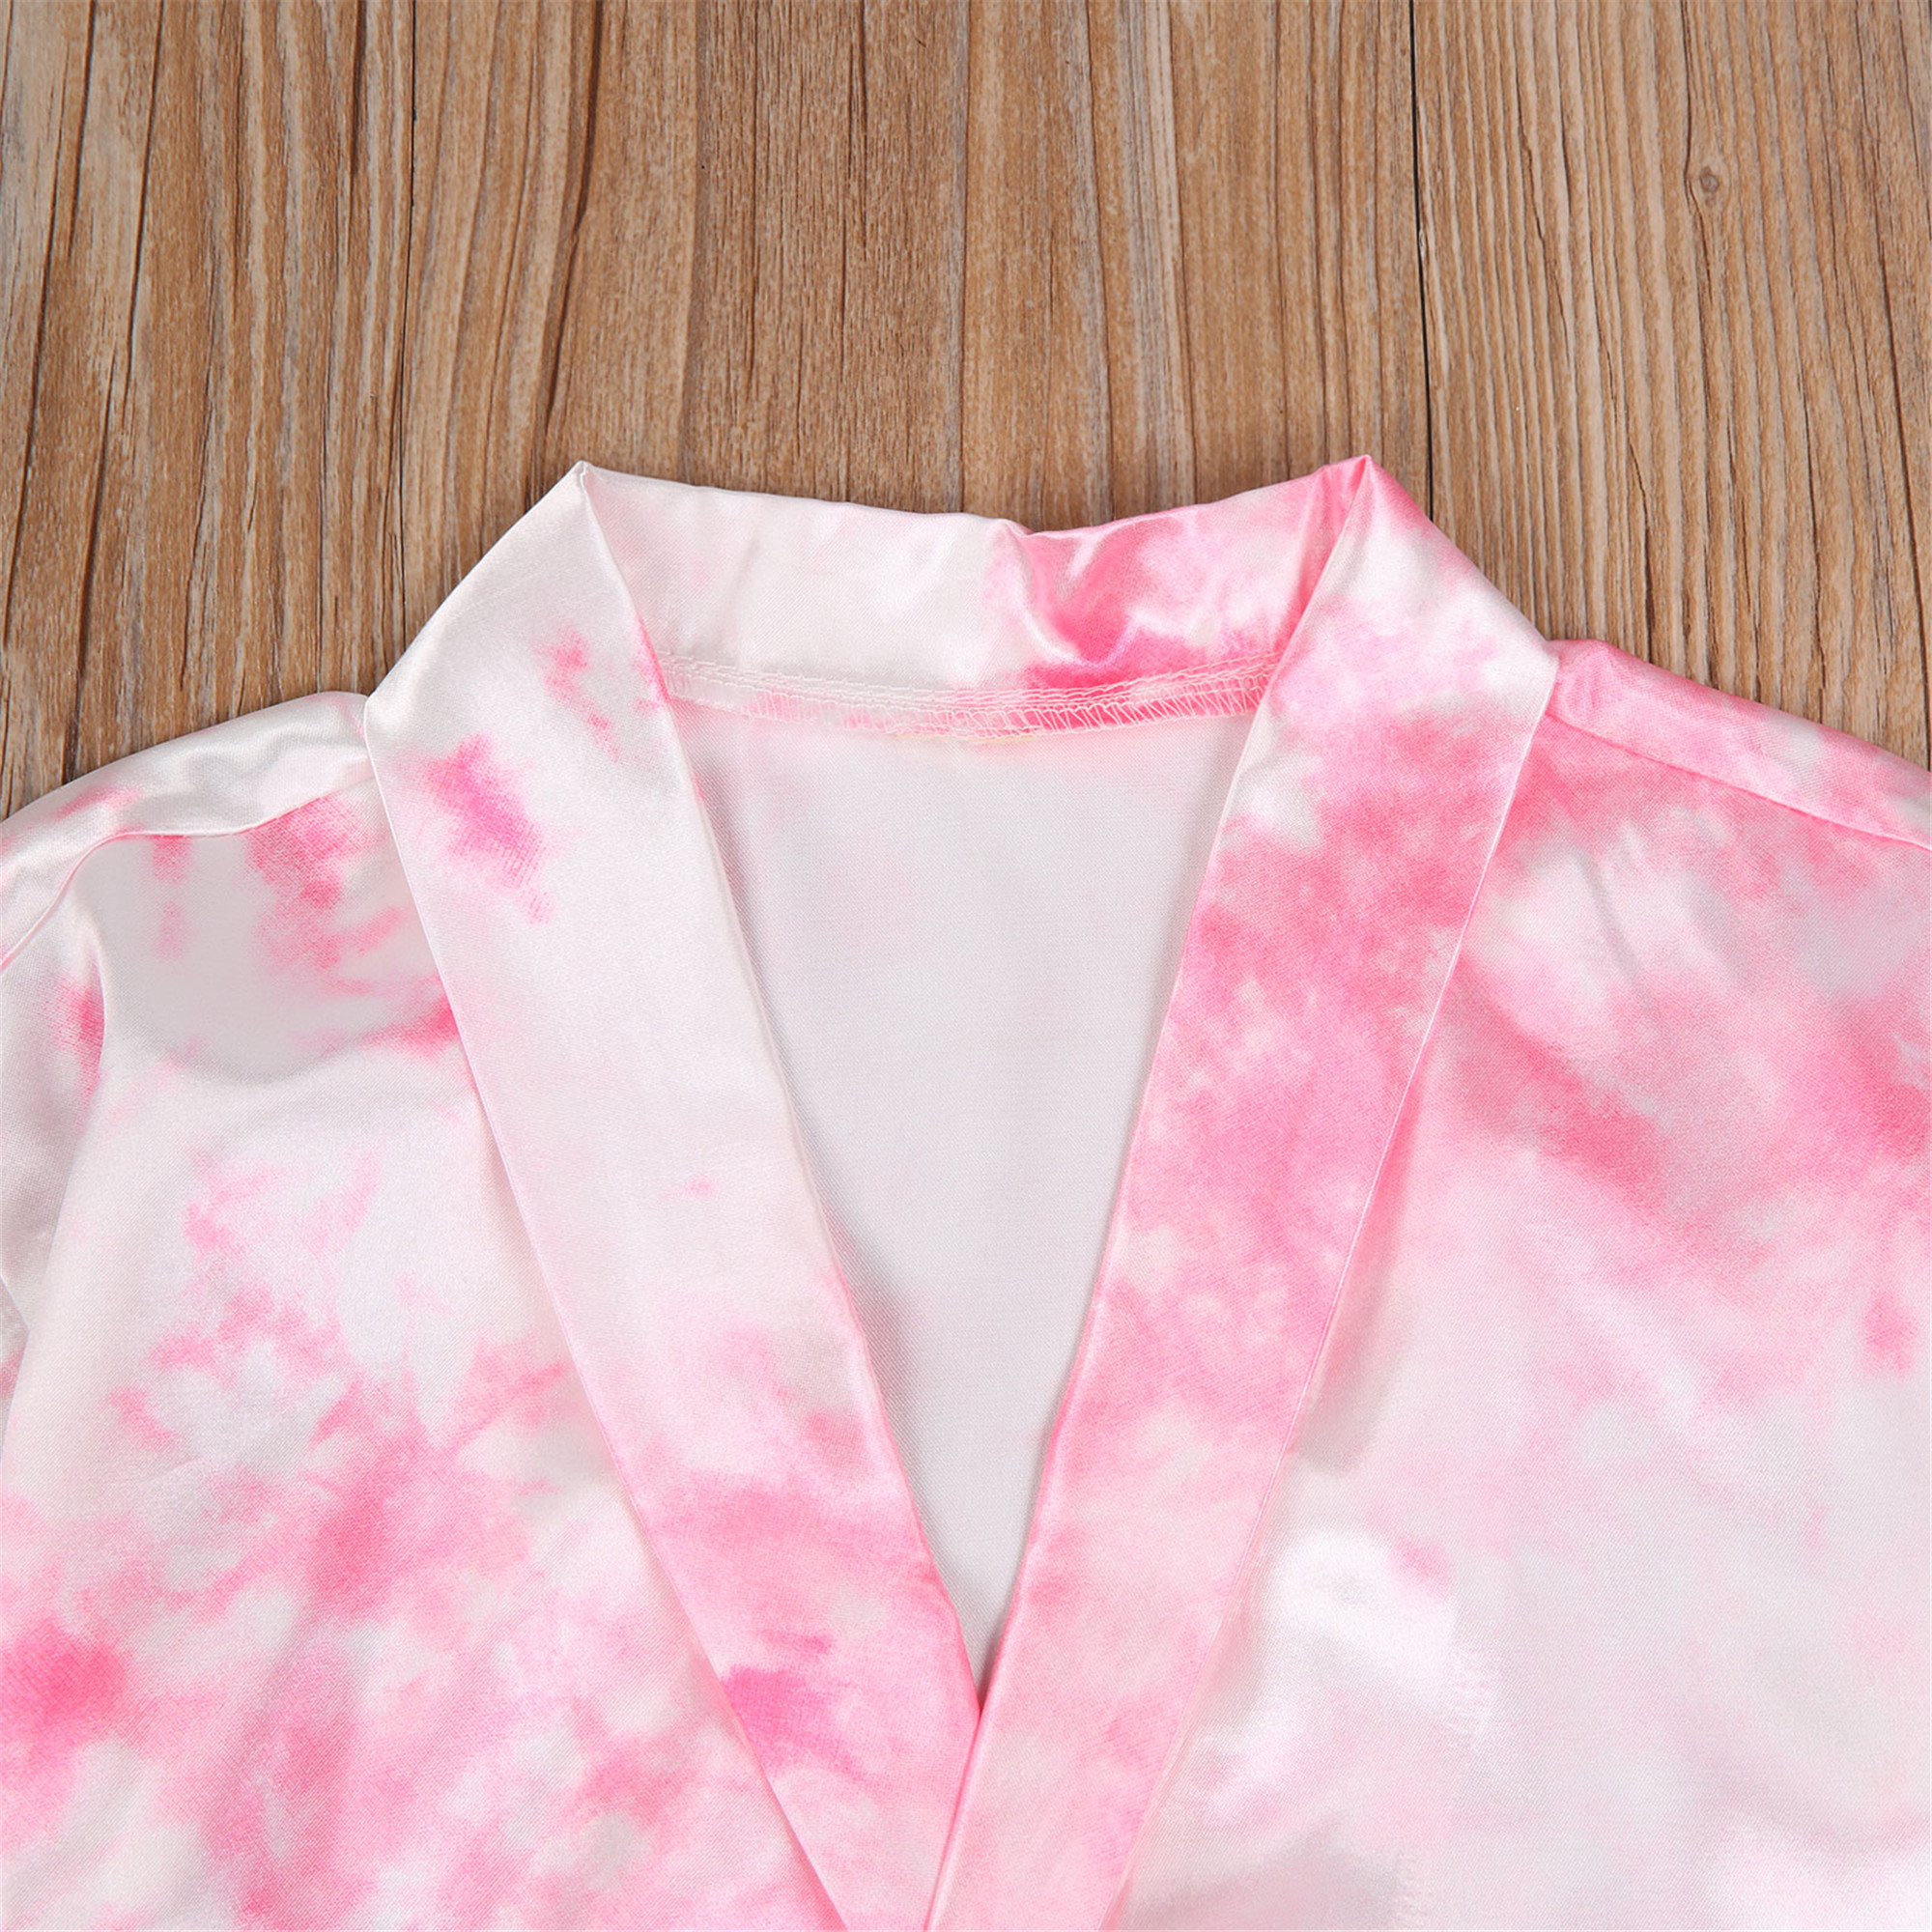 Aunavey Baby Girl Silk Satin Gown Sleepwear Plain Kimono Robe Toddler Kids Nightwear - image 5 of 6